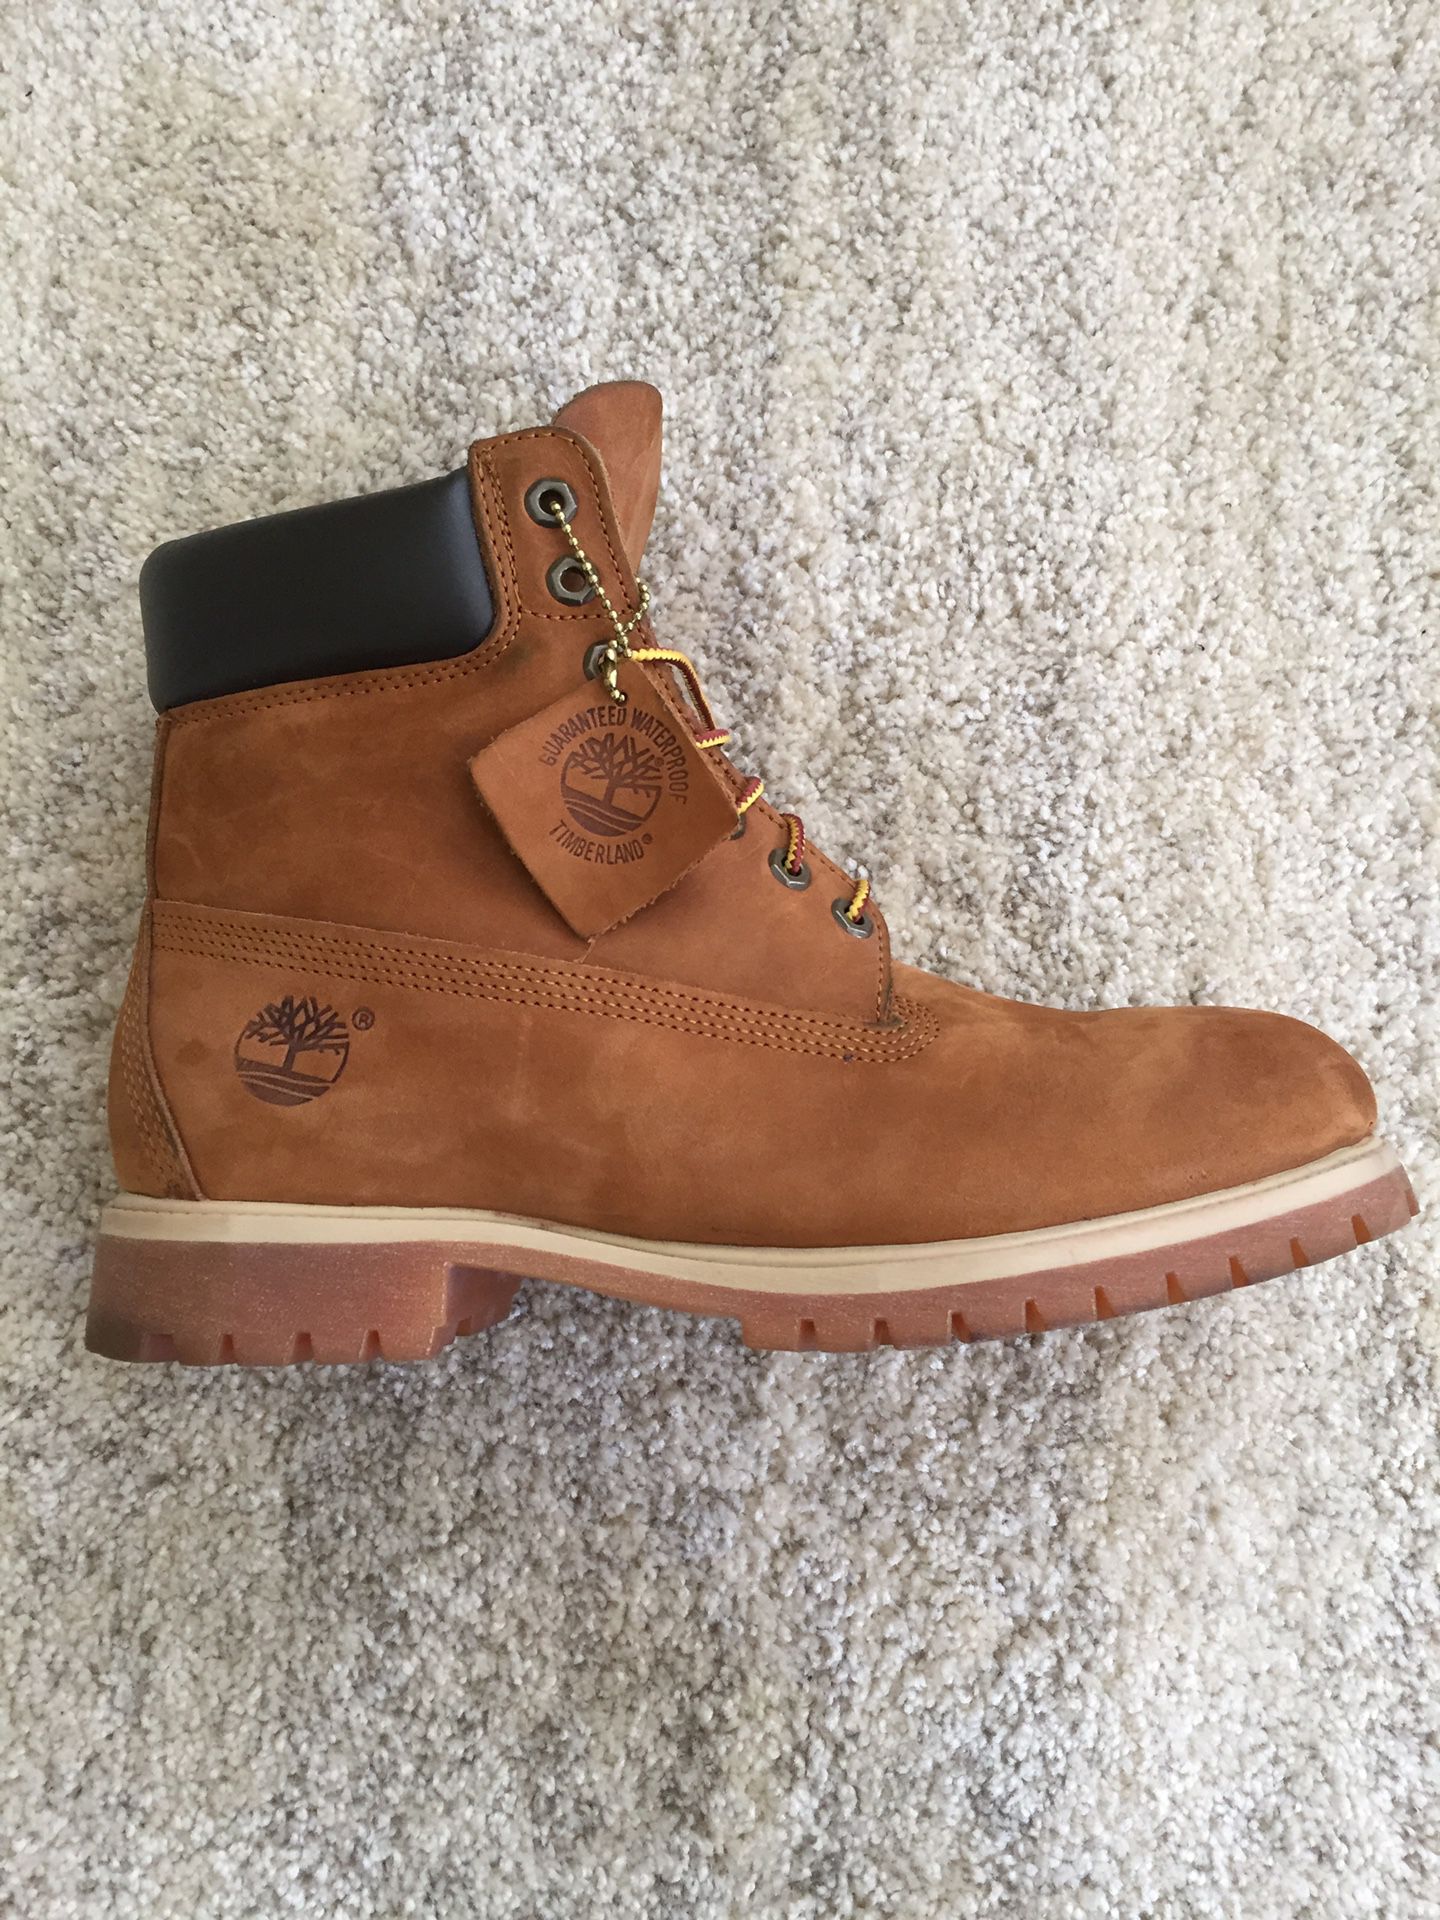 Timberland Men’s 6-inch Premium Waterproof Boots (Size 10.5)